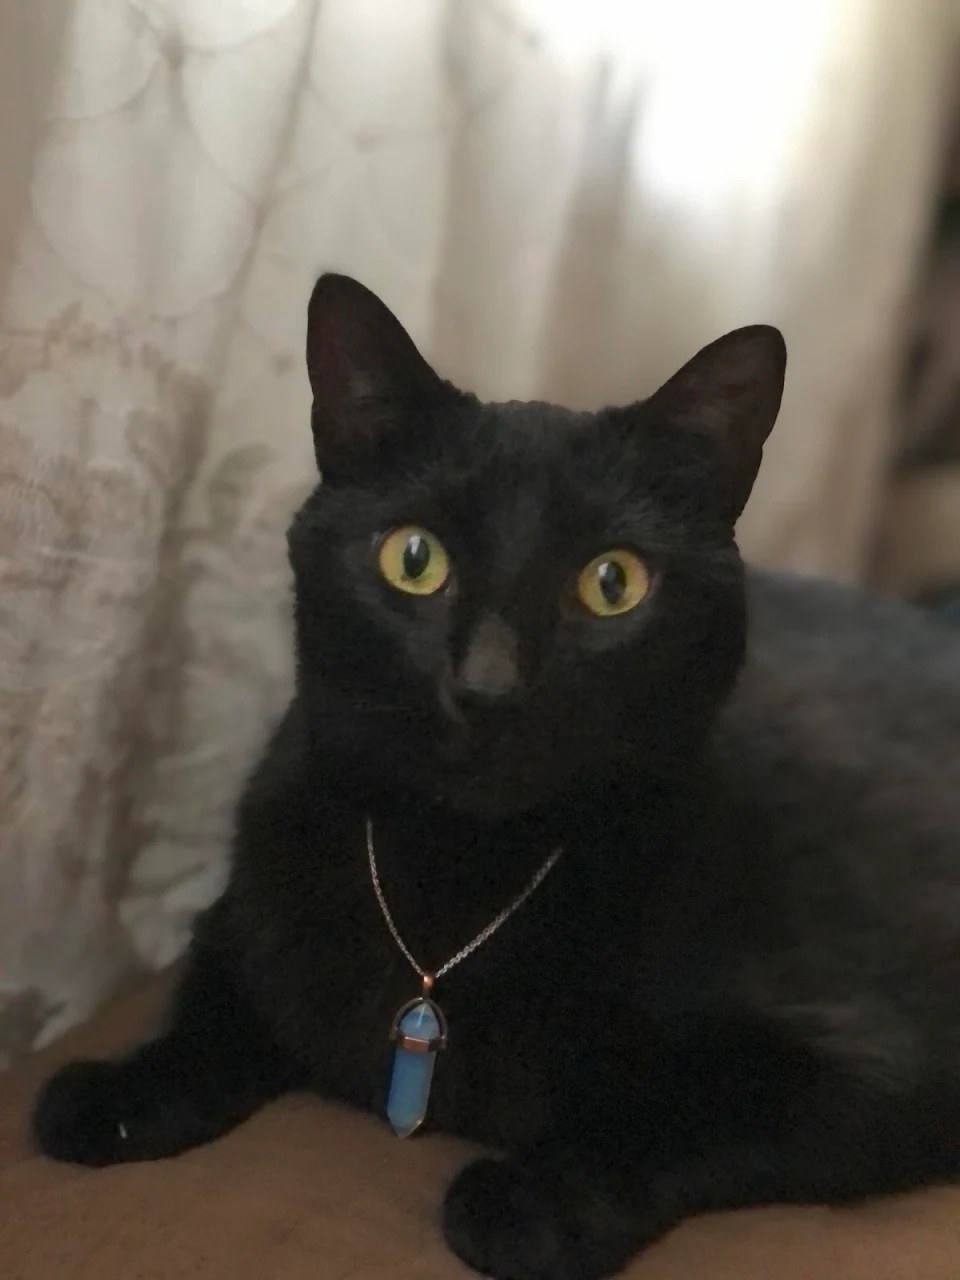 Meet my beautiful black cat, Sheila.